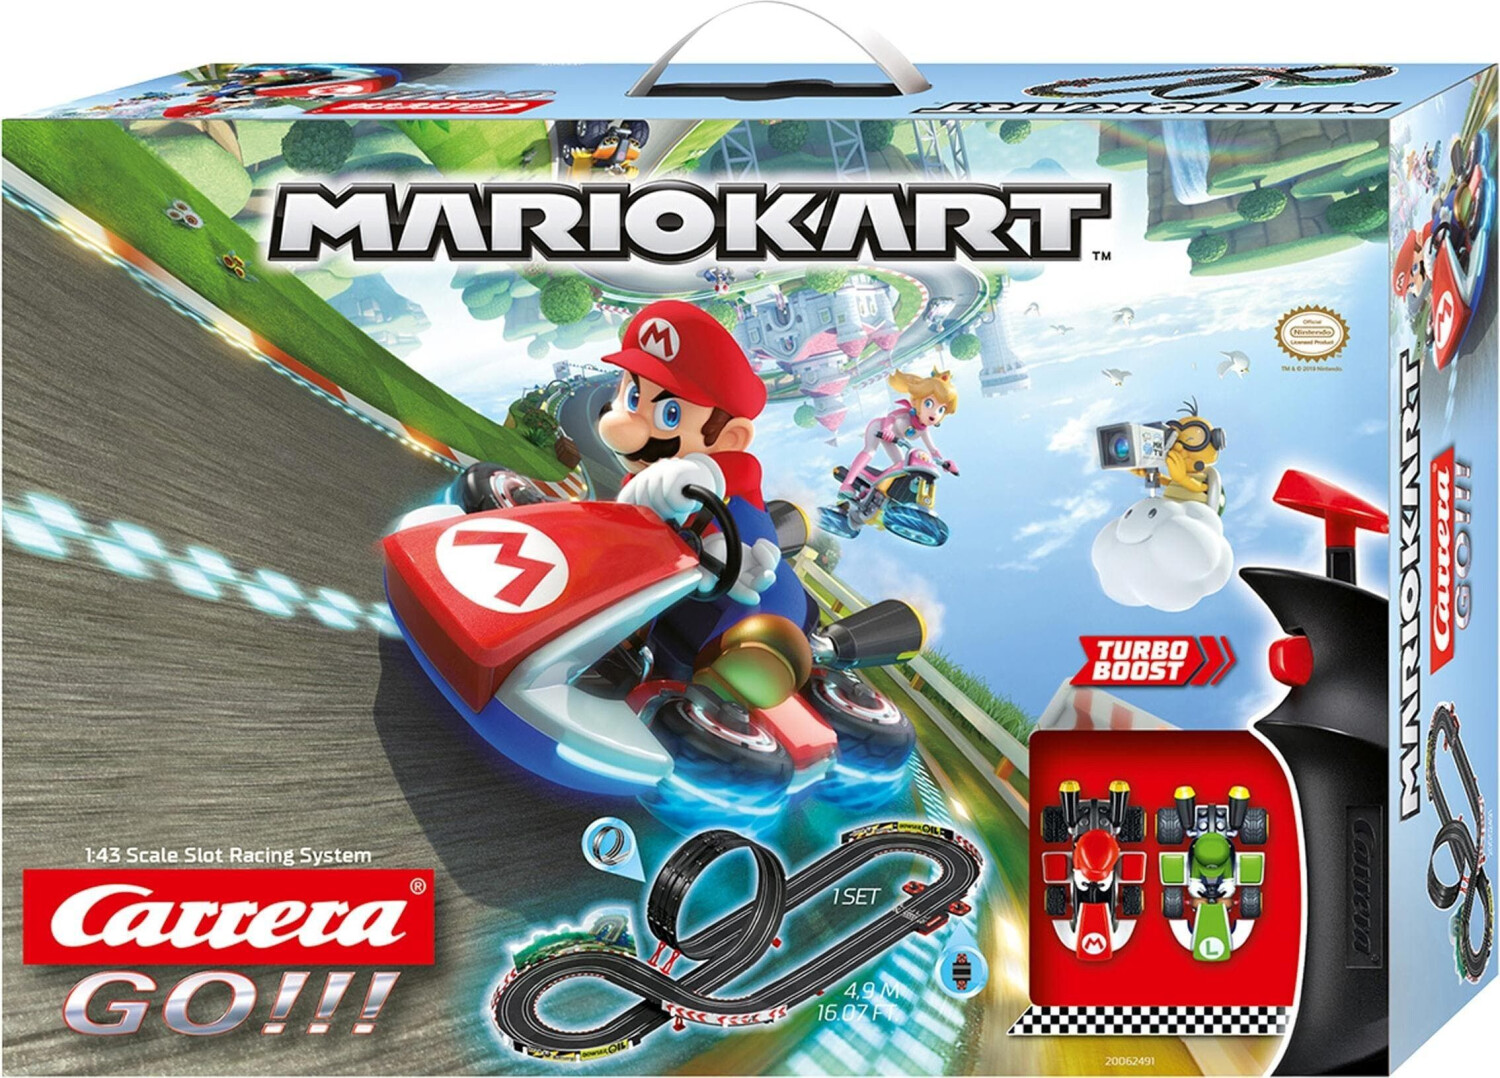 CARRERA Circuit Carrera Nintendo Mario Kart 8 First pas cher 